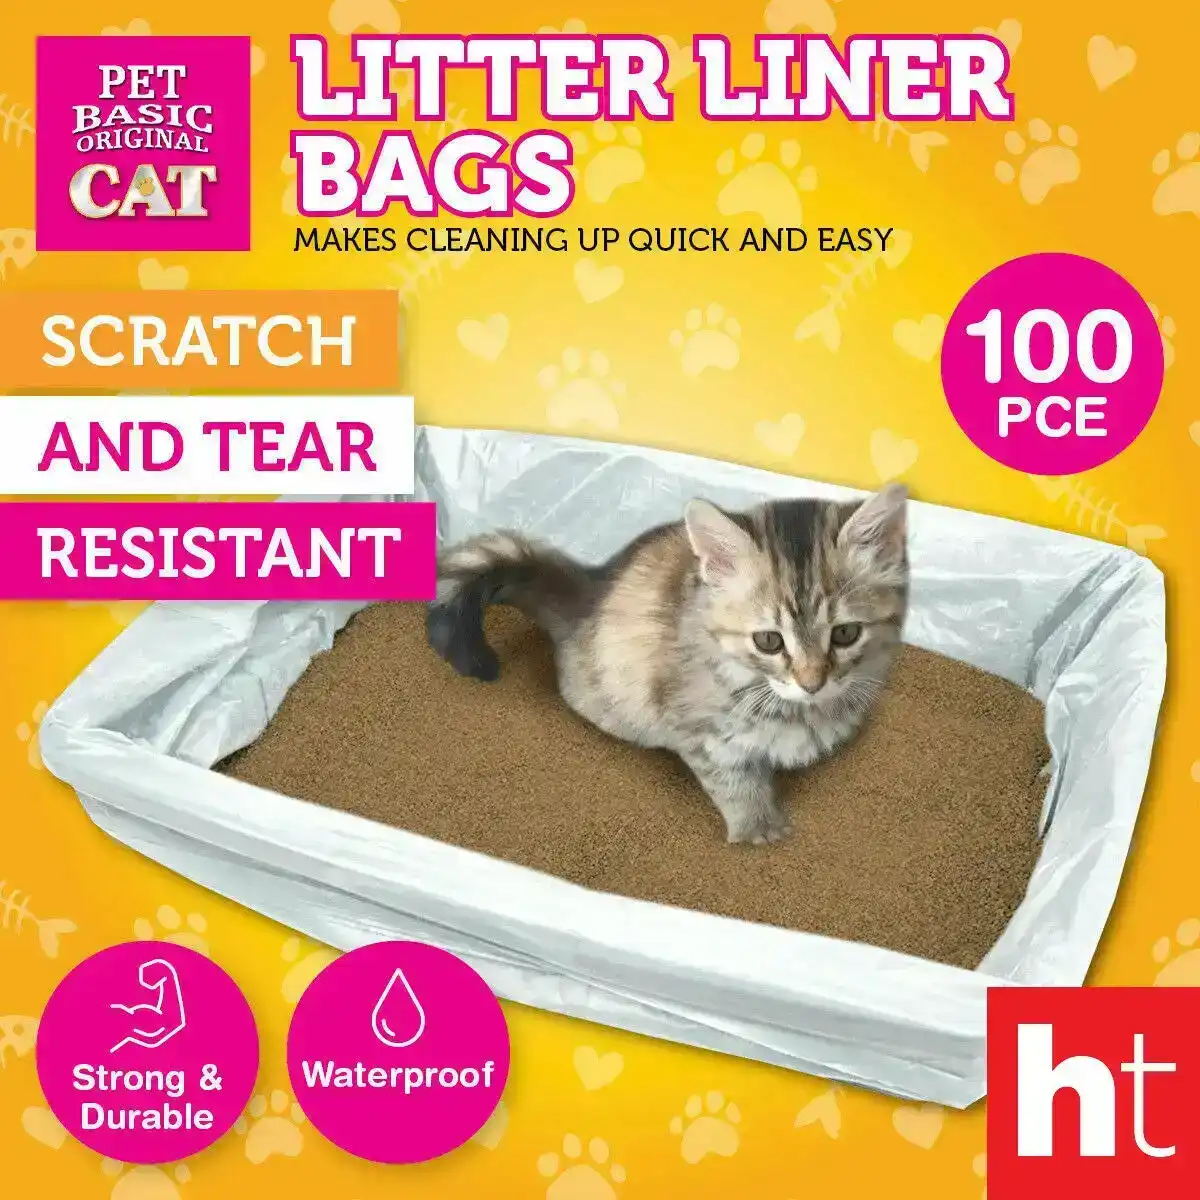 Pet Basic 100PCE Standard Litter Liner Bags Scratch/Tear Resistant Strong